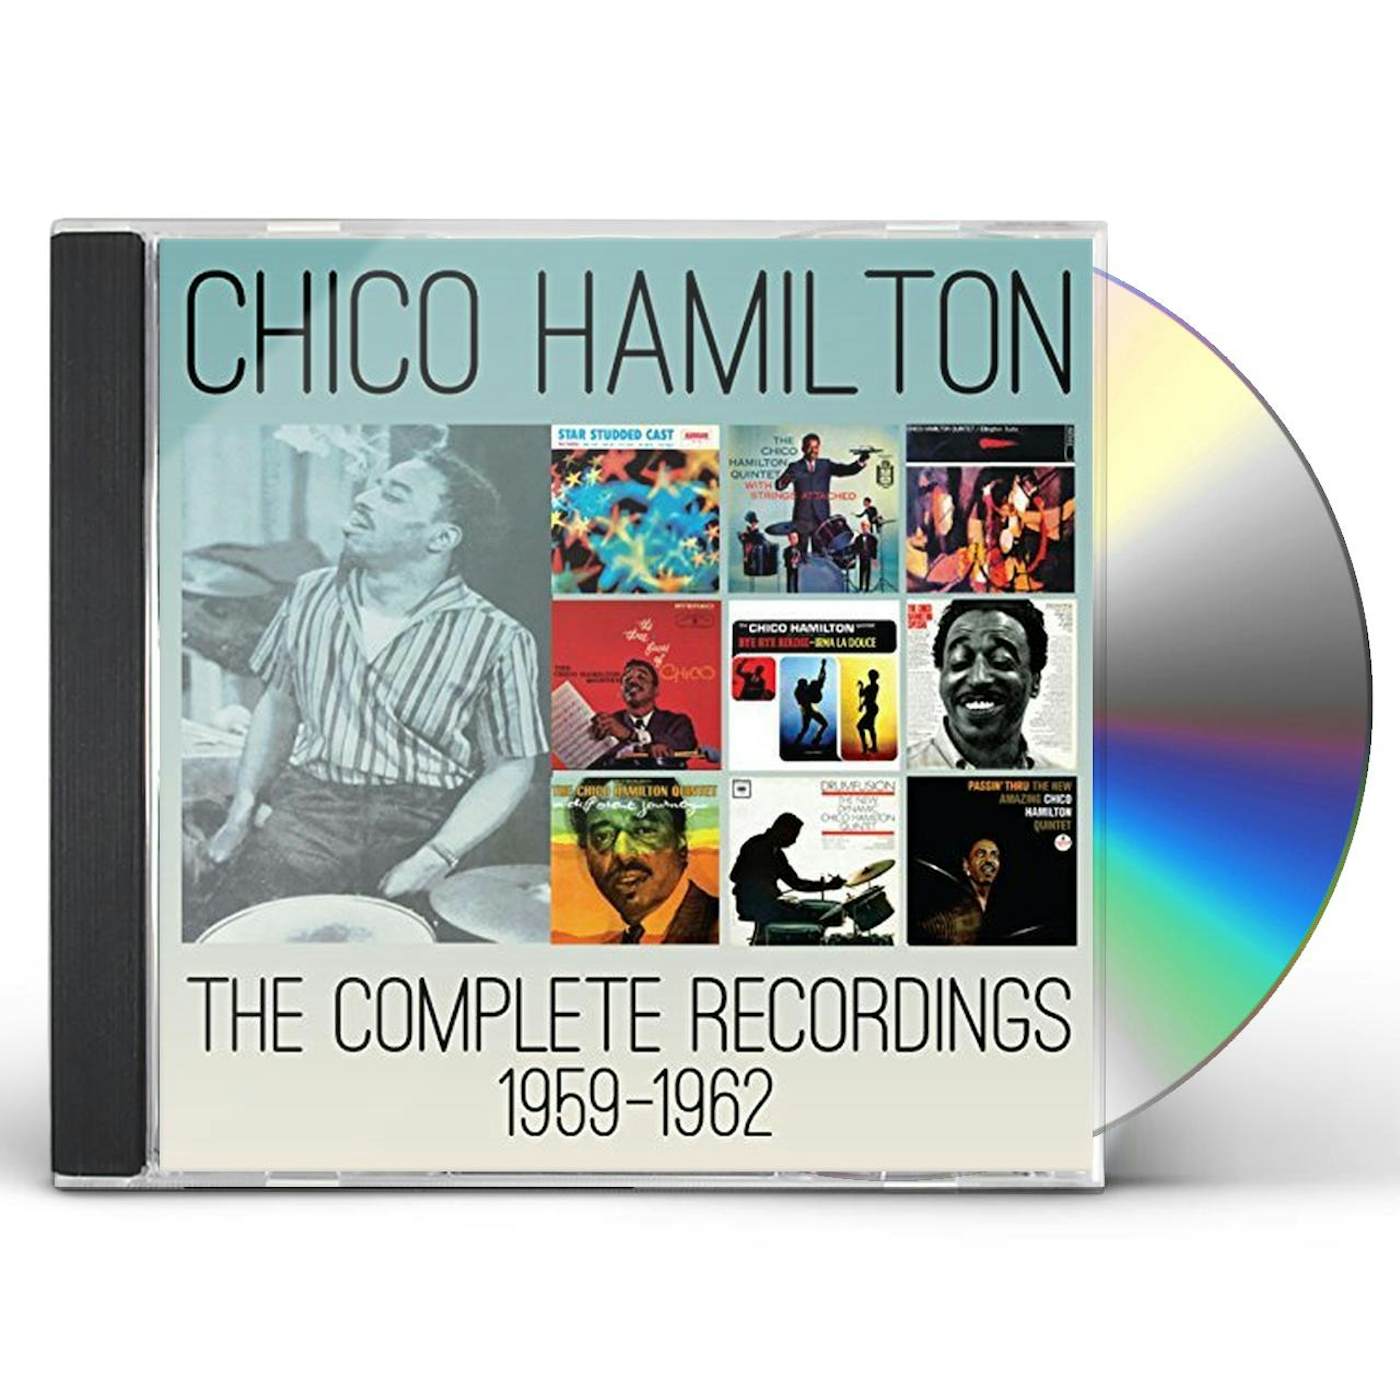 Chico Hamilton 1962 CD